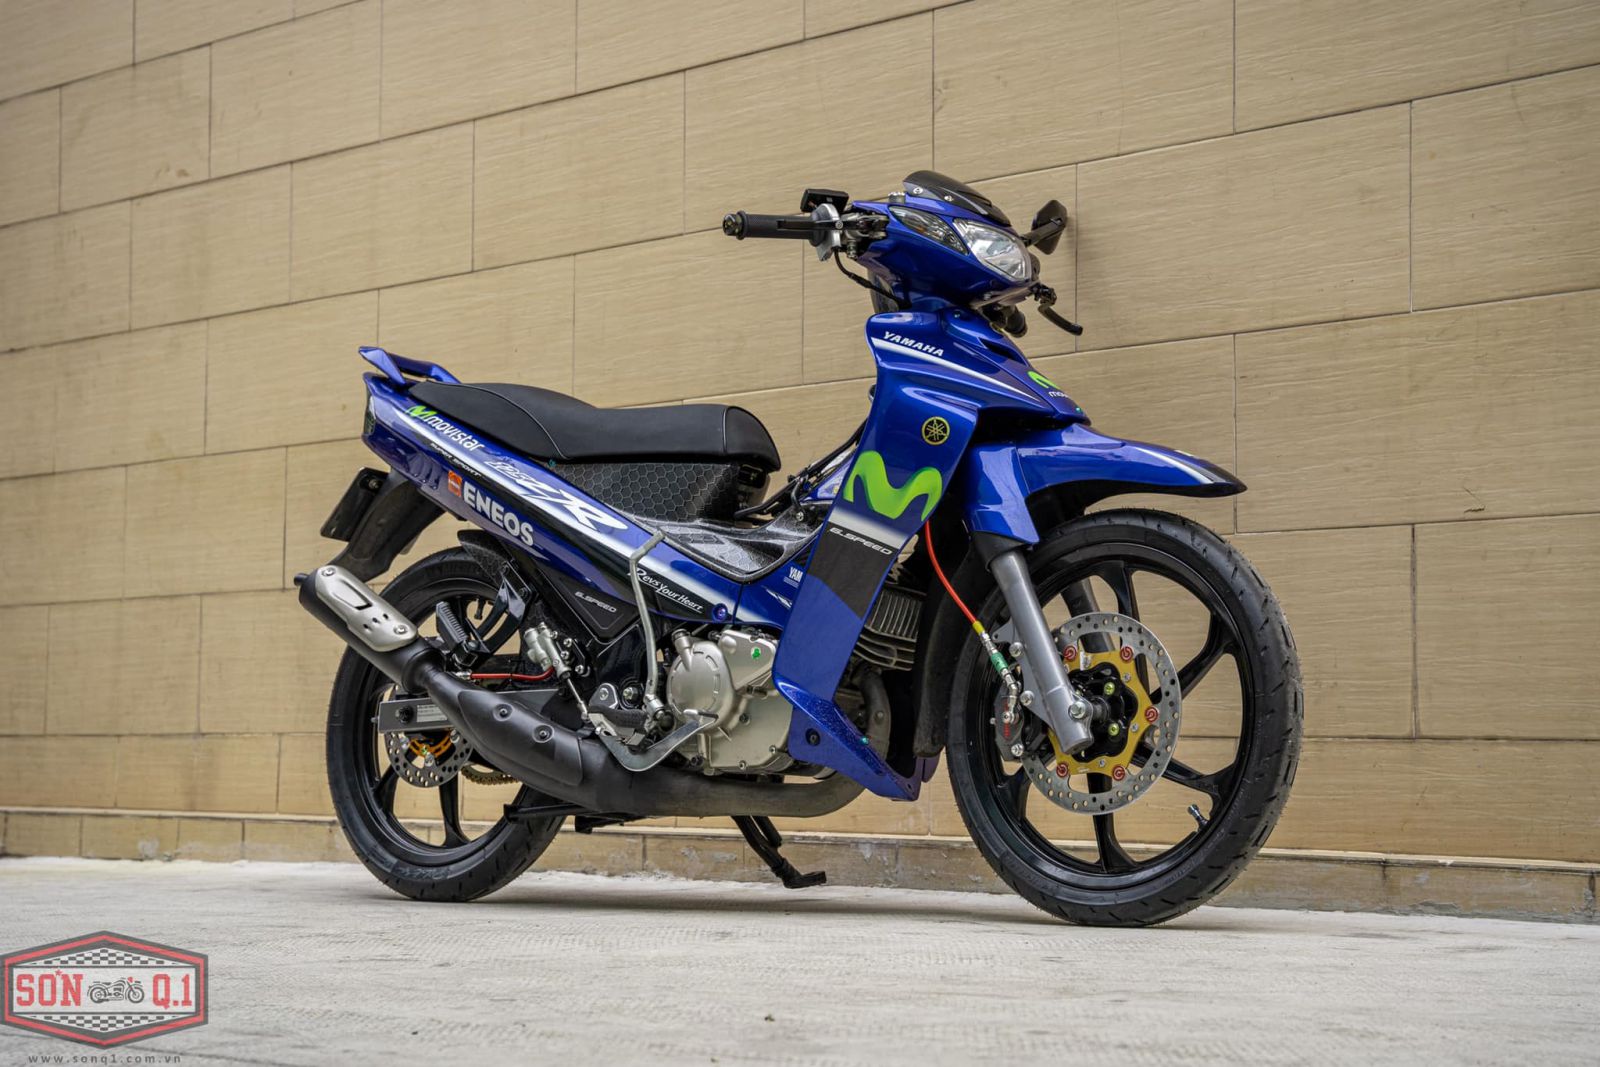 Yamaha 125 ZR Ya z125 Movistar chuẩn bị về Việt Nam giá gần 300 triệu   Motosaigon